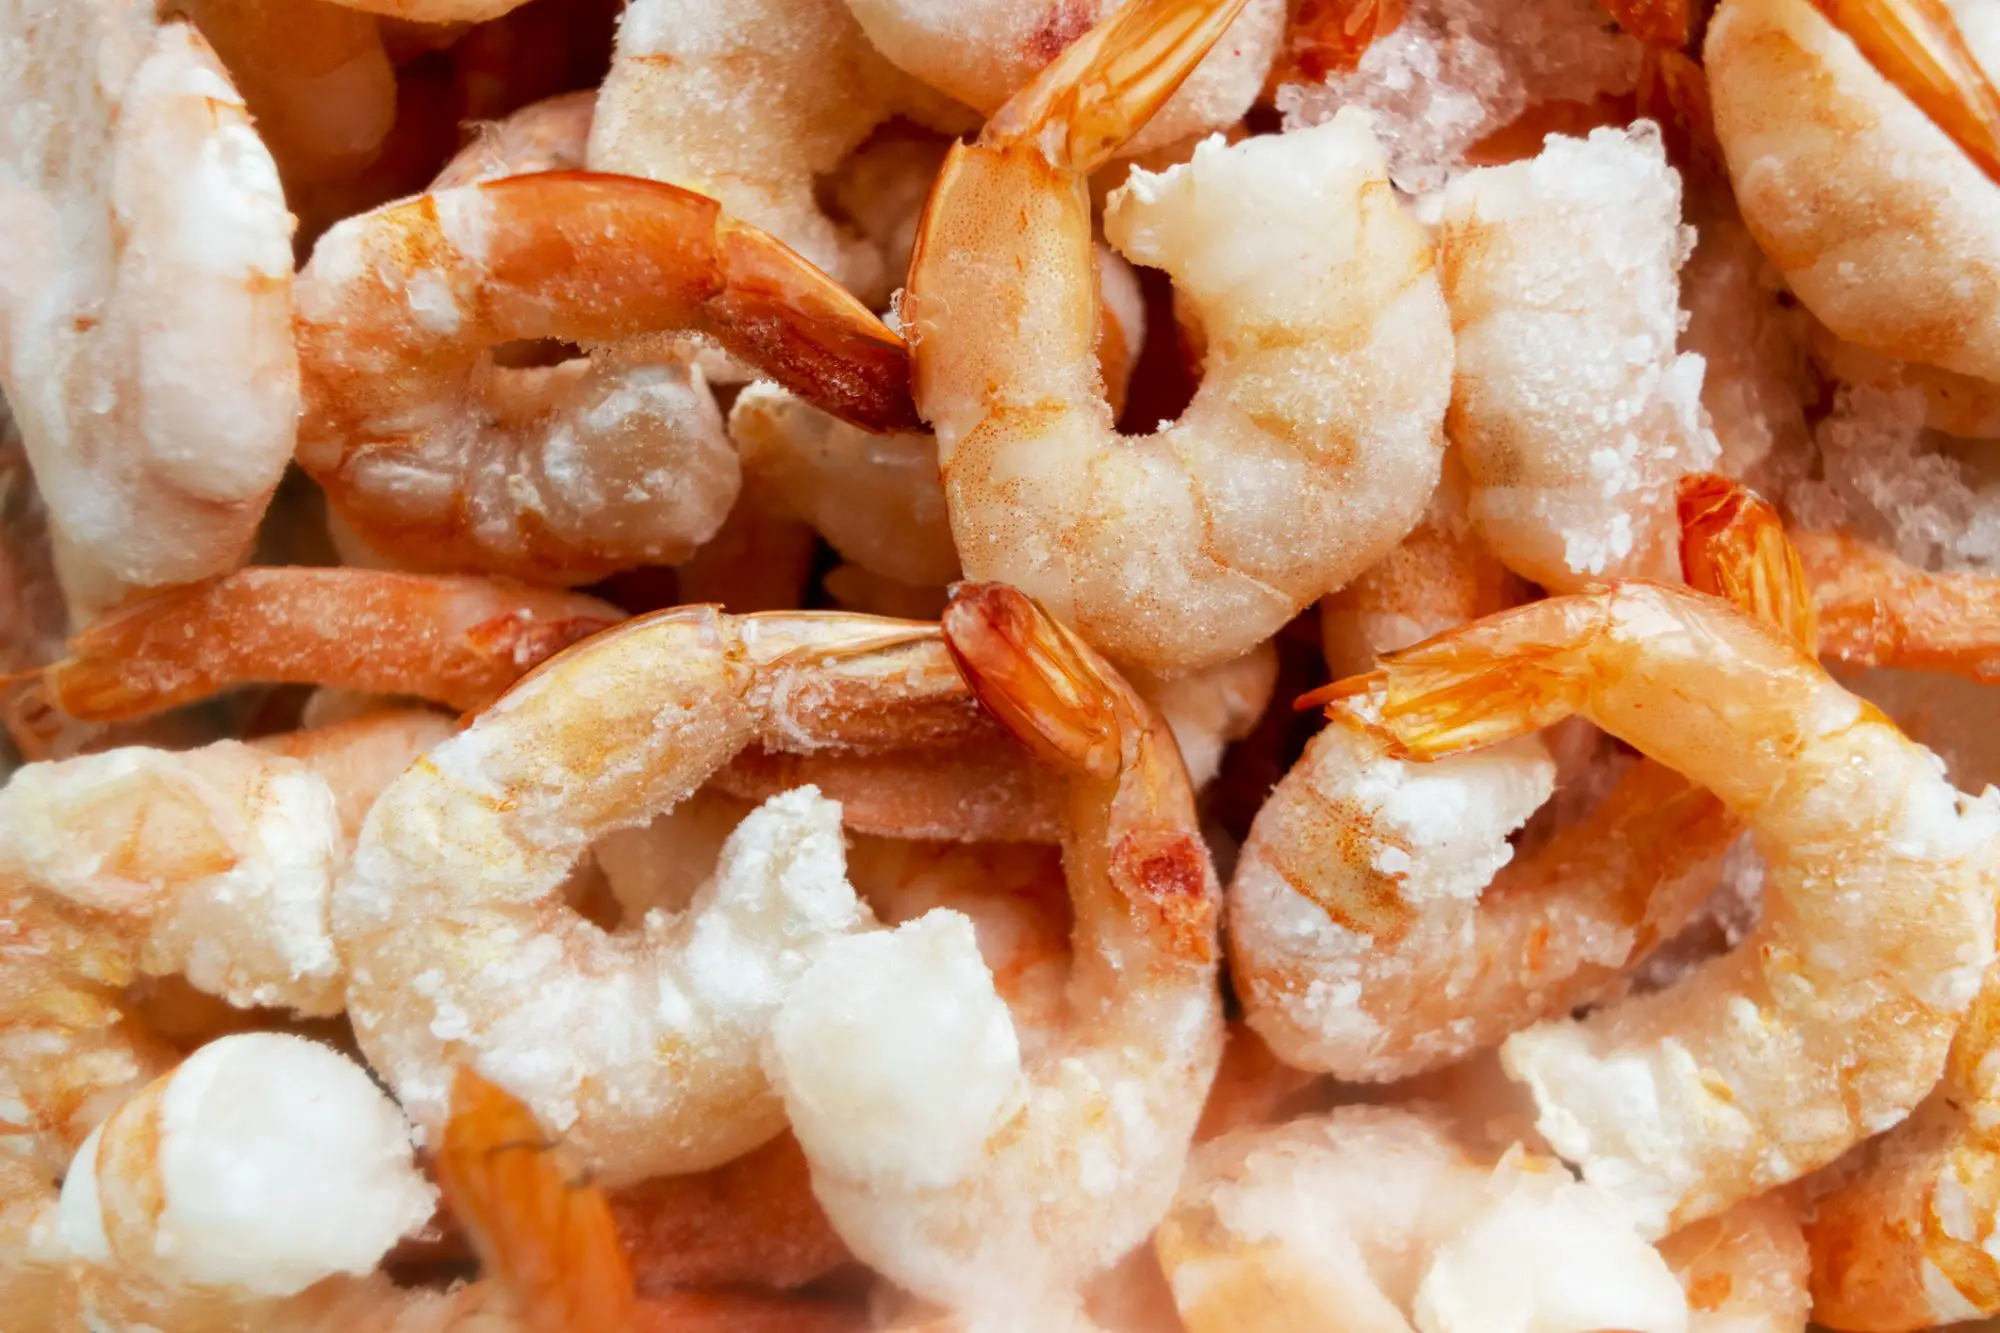 thawed shrimp